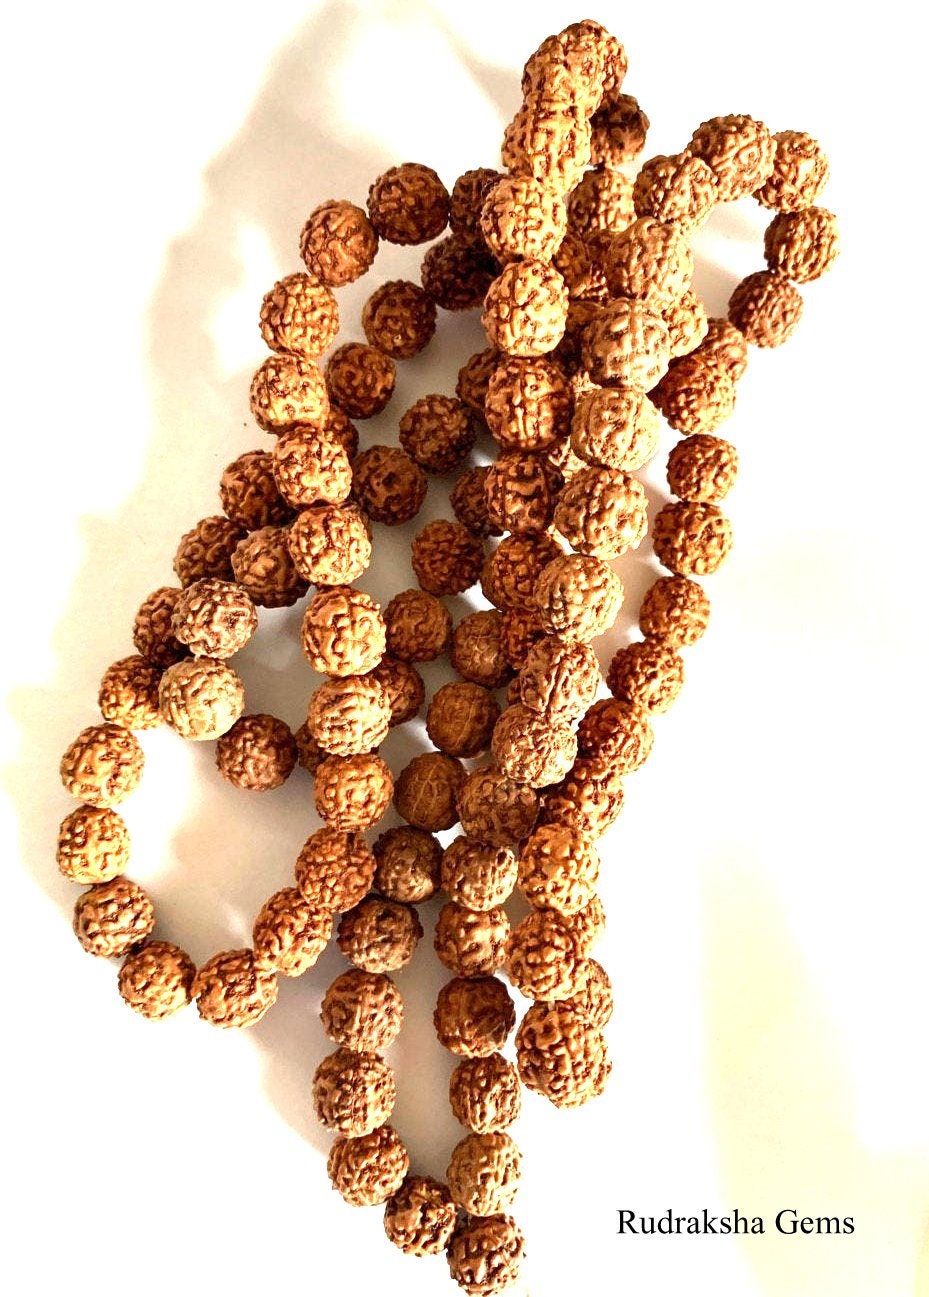 Rudraksha Beads - 11 MM Natural Rudraksha Beads - Loose Rudraksh Beads - Meditation prayer beads - Yoga Jewellry Findings DIY Accessories